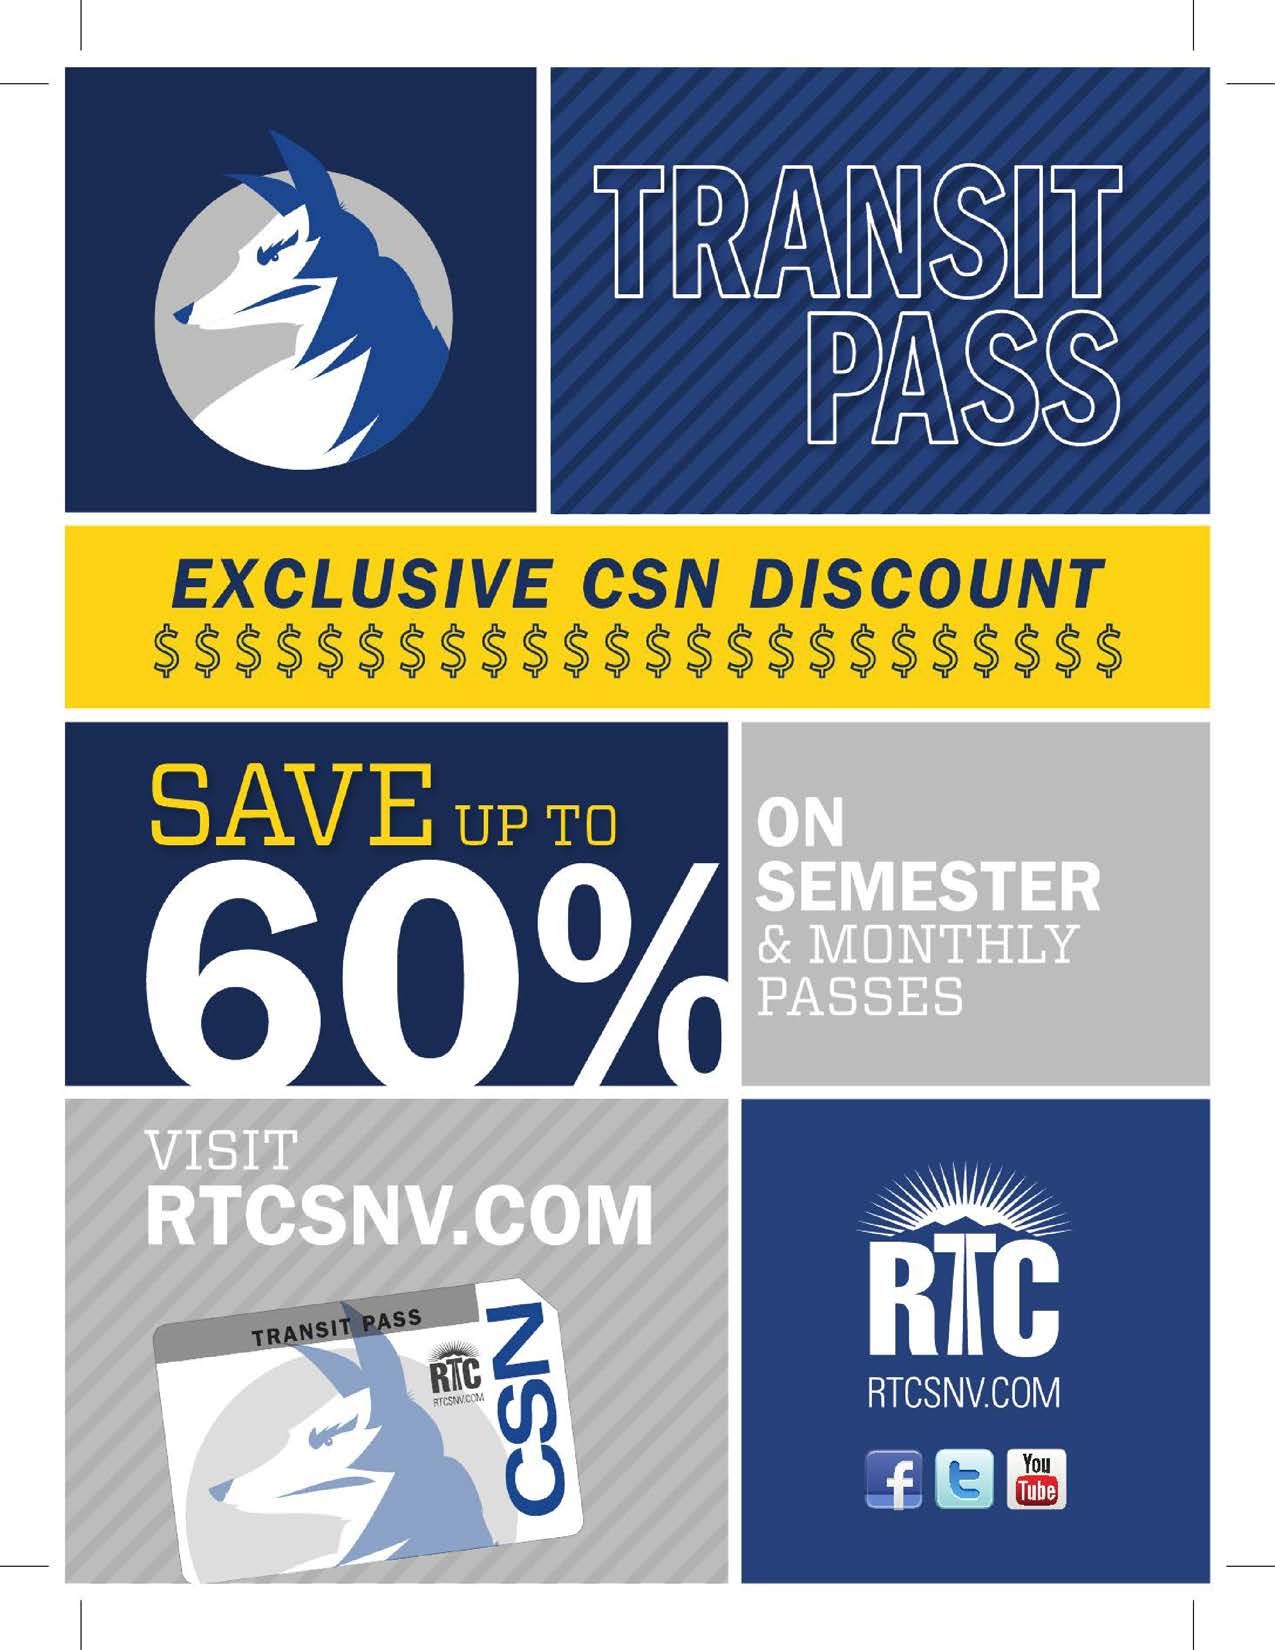 Transit Pass Exclusive CSN Discount